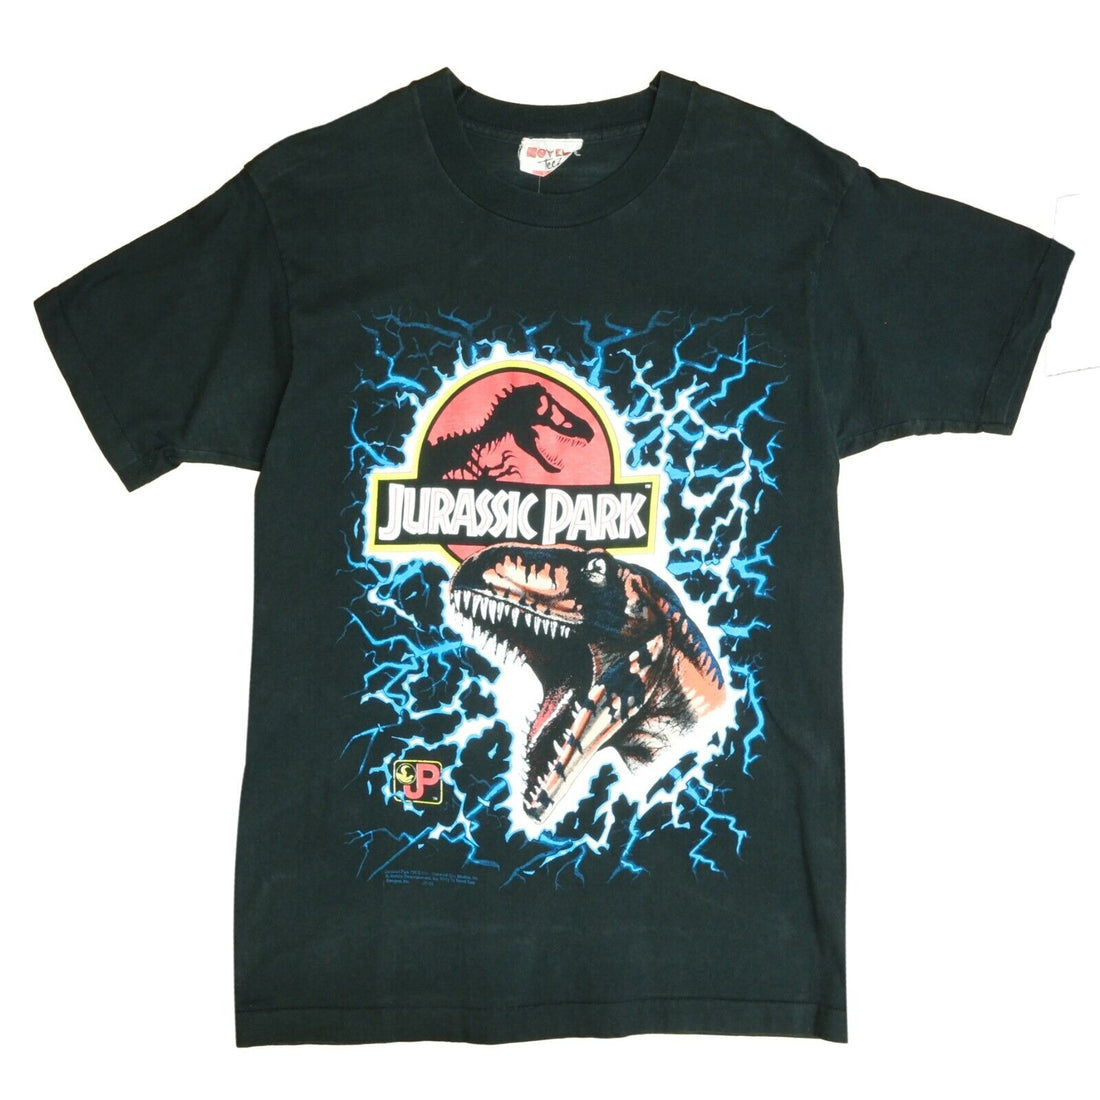 Vintage Jurassic Park T-Shirt Size Small Black Movie Promo 1993 90s